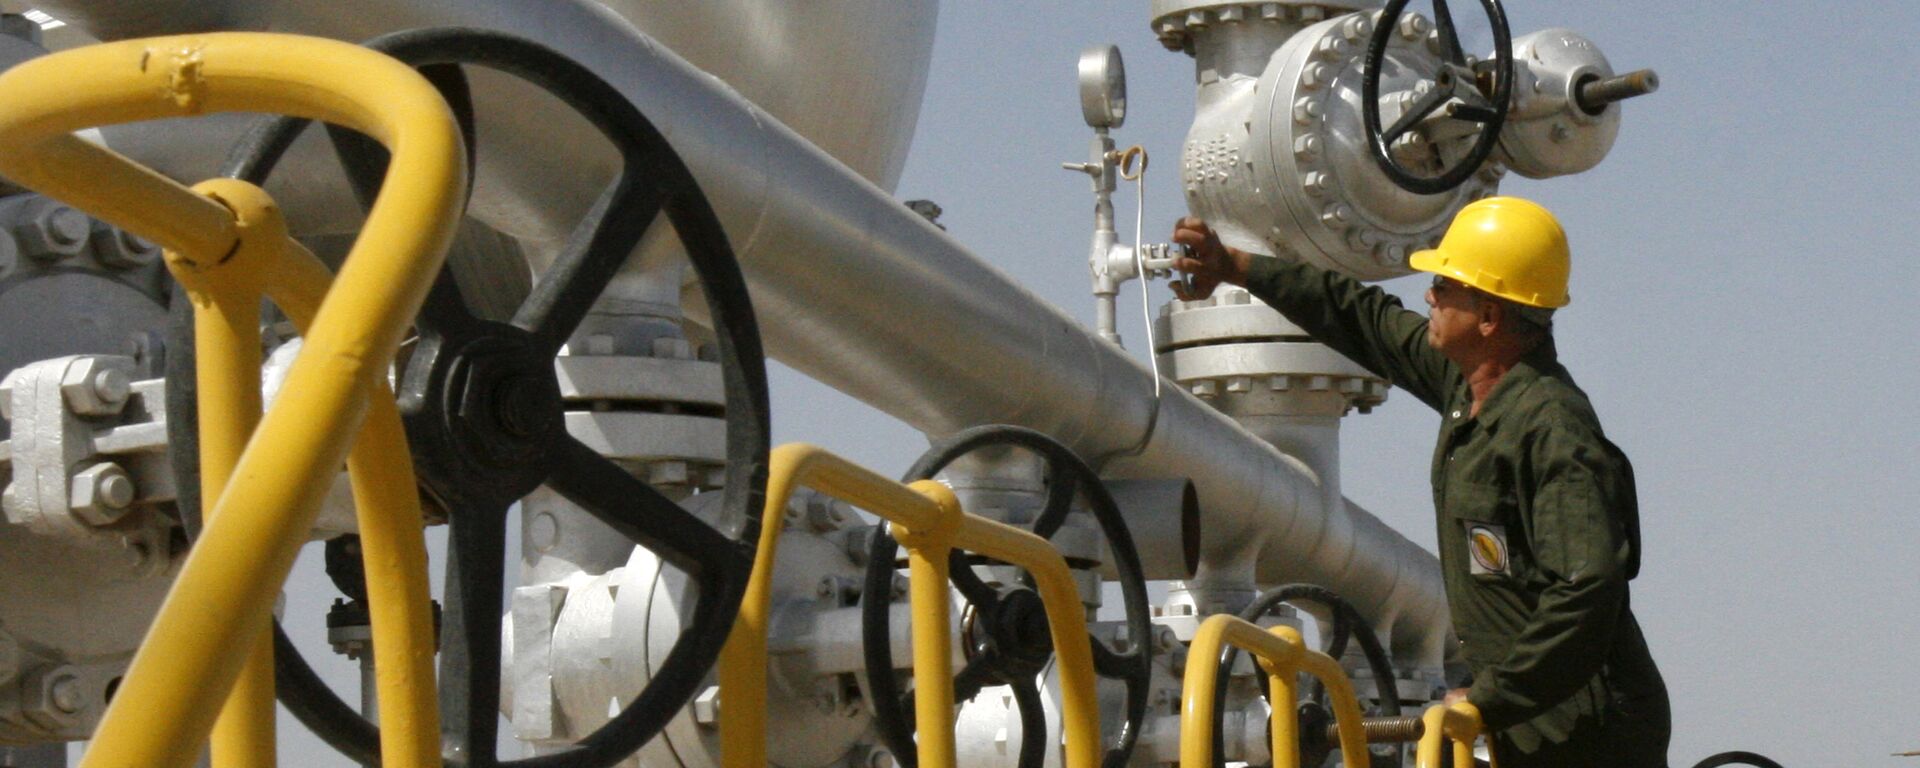  Iranian oil technician checks the oil separator facilities in Azadegan oil field, near Ahvaz, Iran (File) - Sputnik International, 1920, 31.05.2021